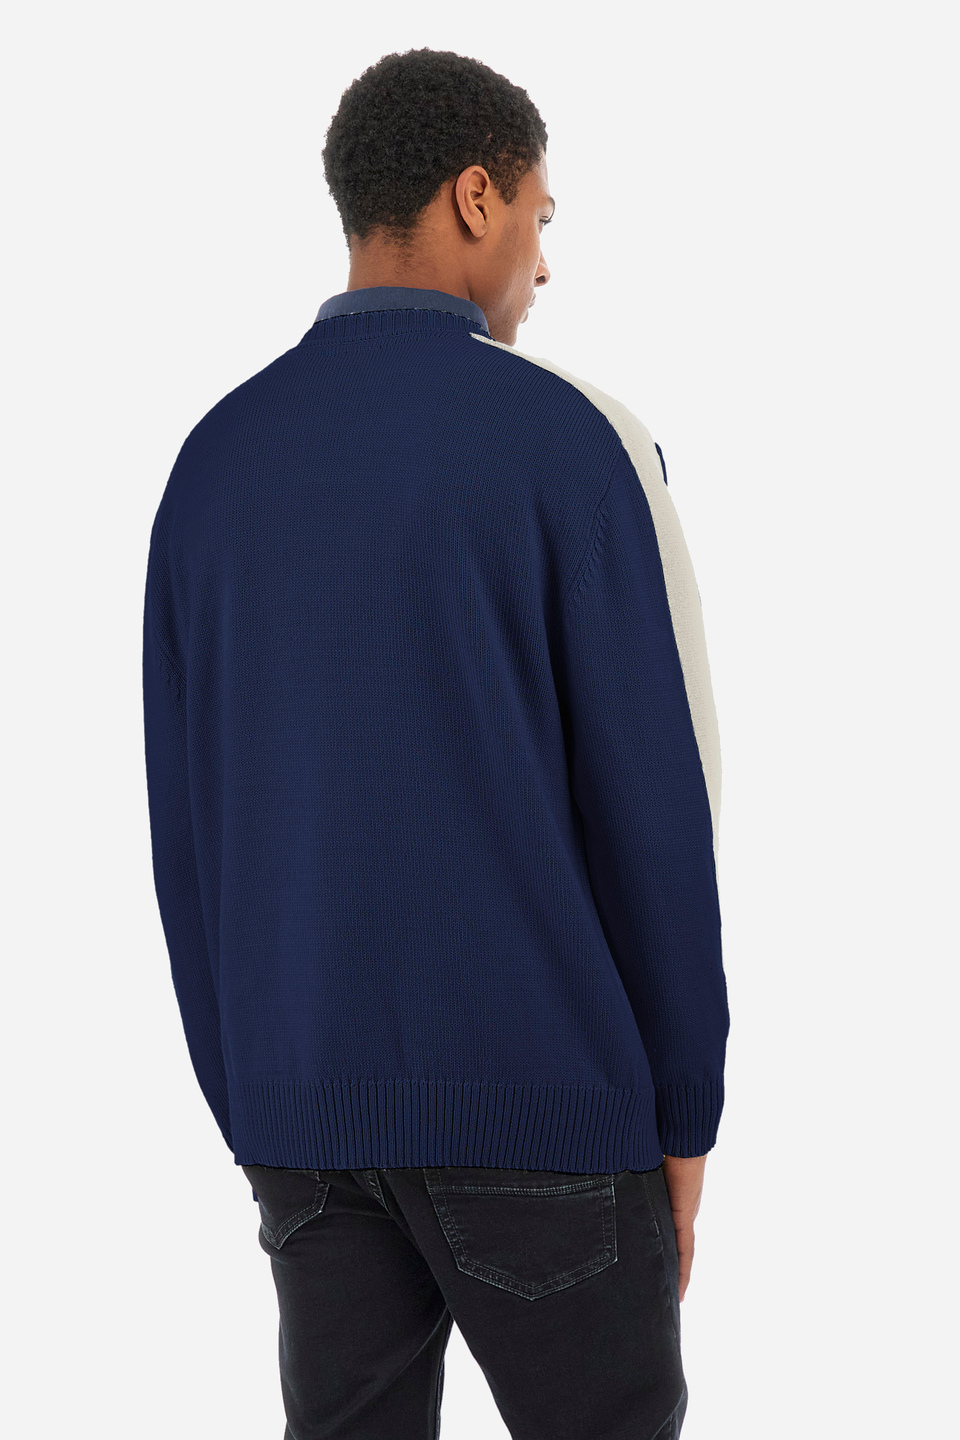 Men’s comfort fit crew neck sweater - Wajih | La Martina - Official Online Shop